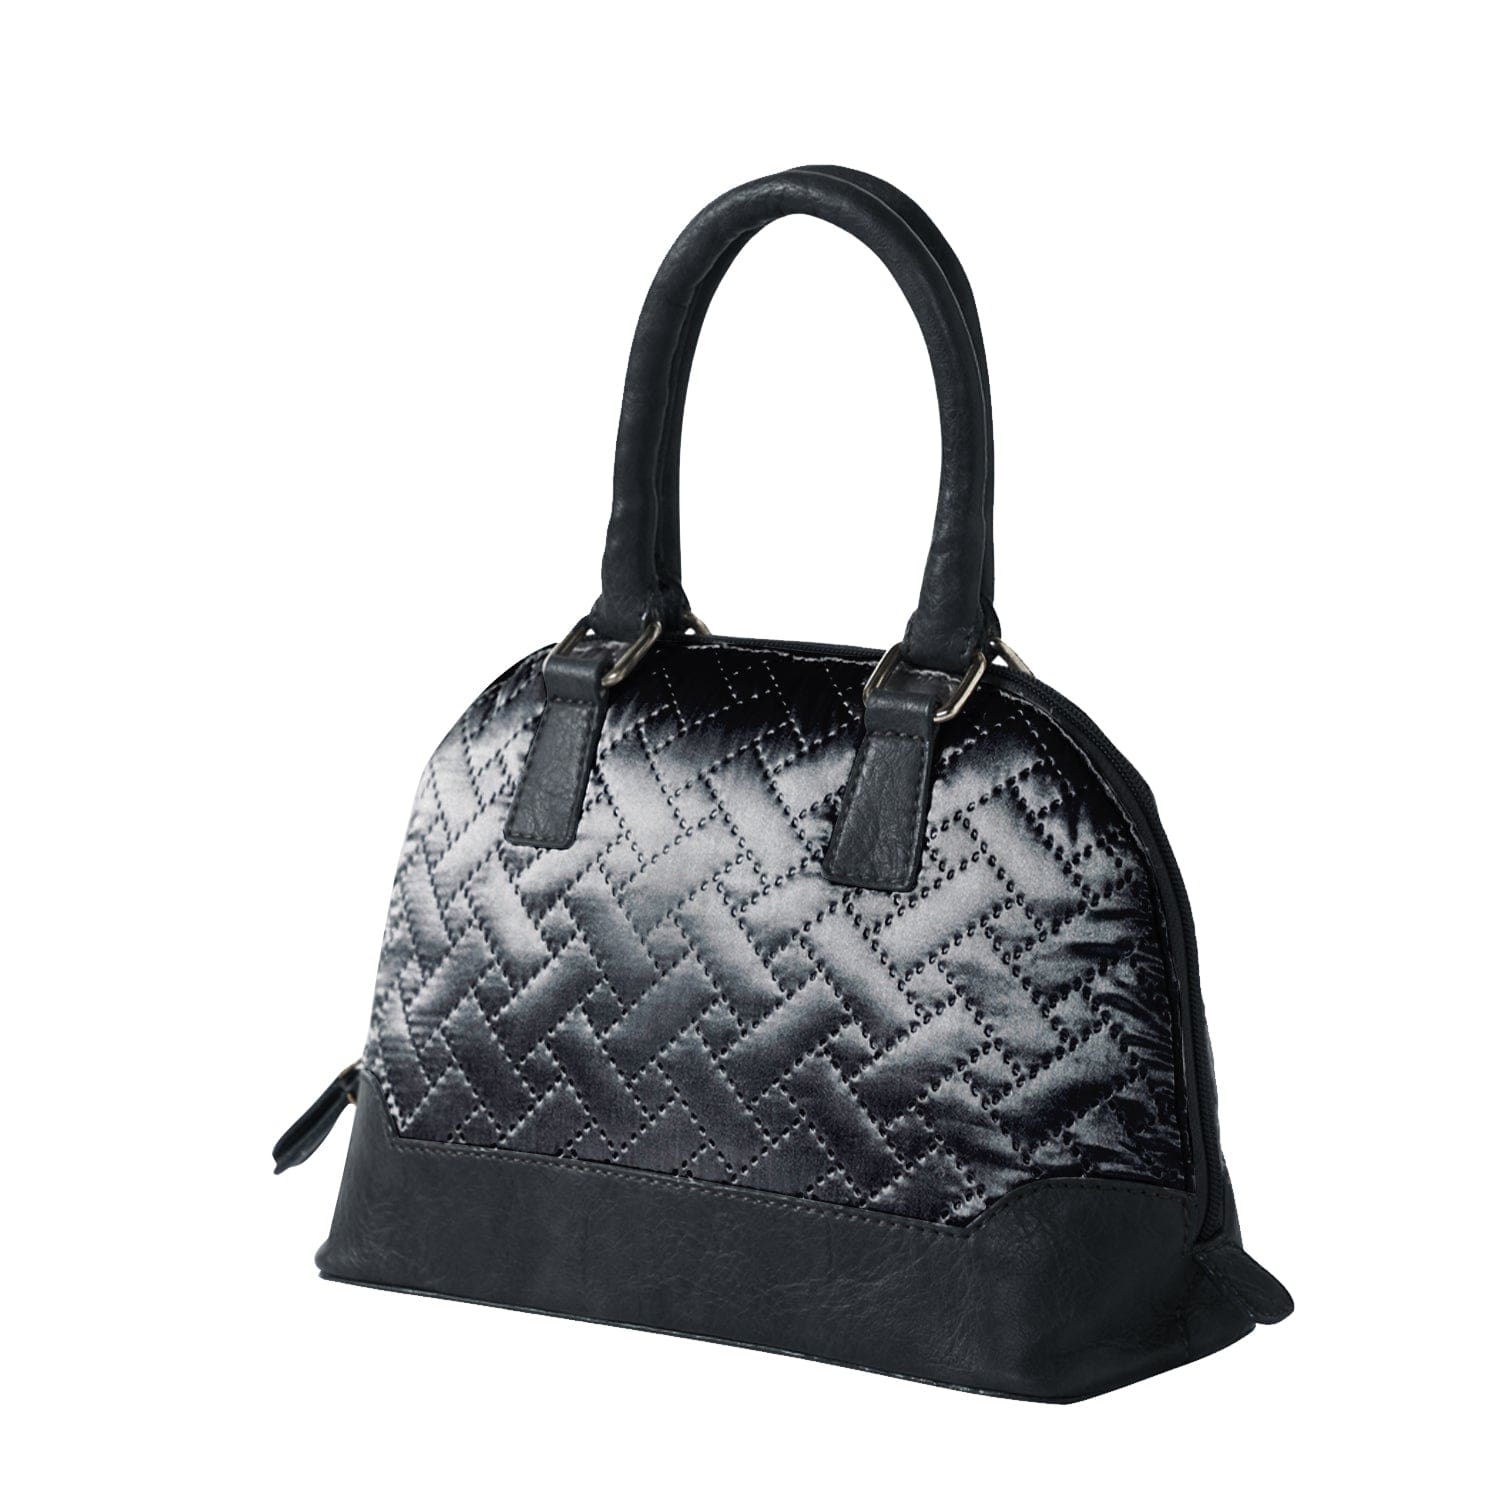 Mona B Small Handbag, Shoulder Bags For Shopping Travel With Stylish Design For Women: BLK - QRP-301 BLK - Handbag by Mona-B - Backpack, Flash Sale, Flat50, New Arrivals, Sale, Shop1999, Shop2999, Shop3999